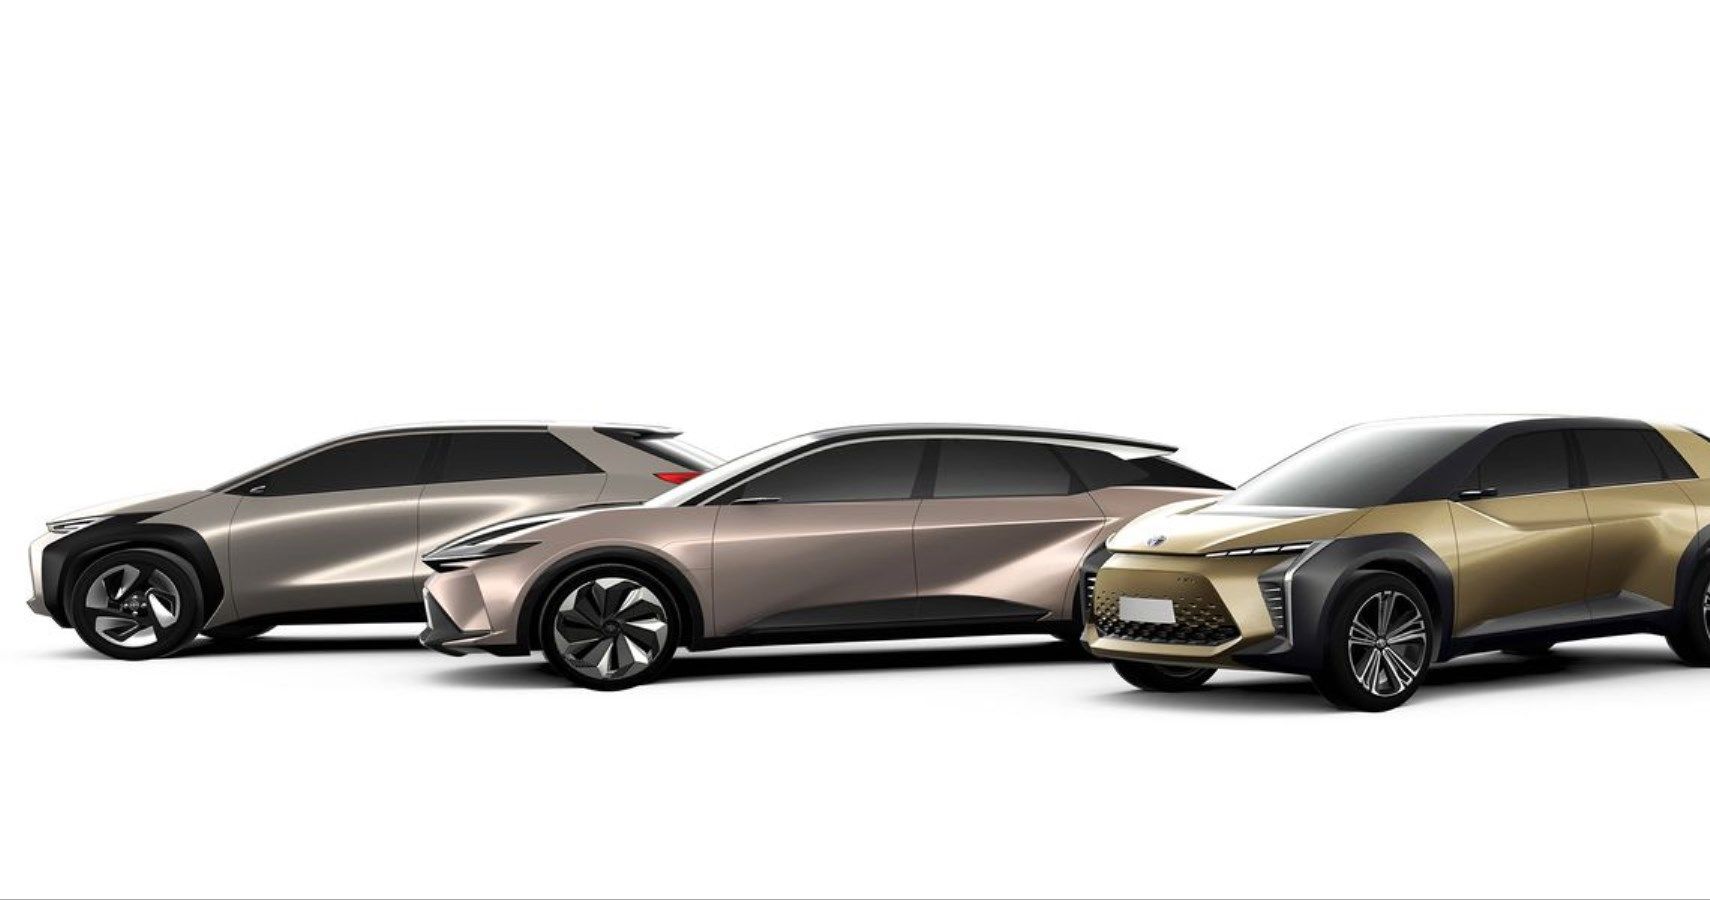 Toyotat EV concepts